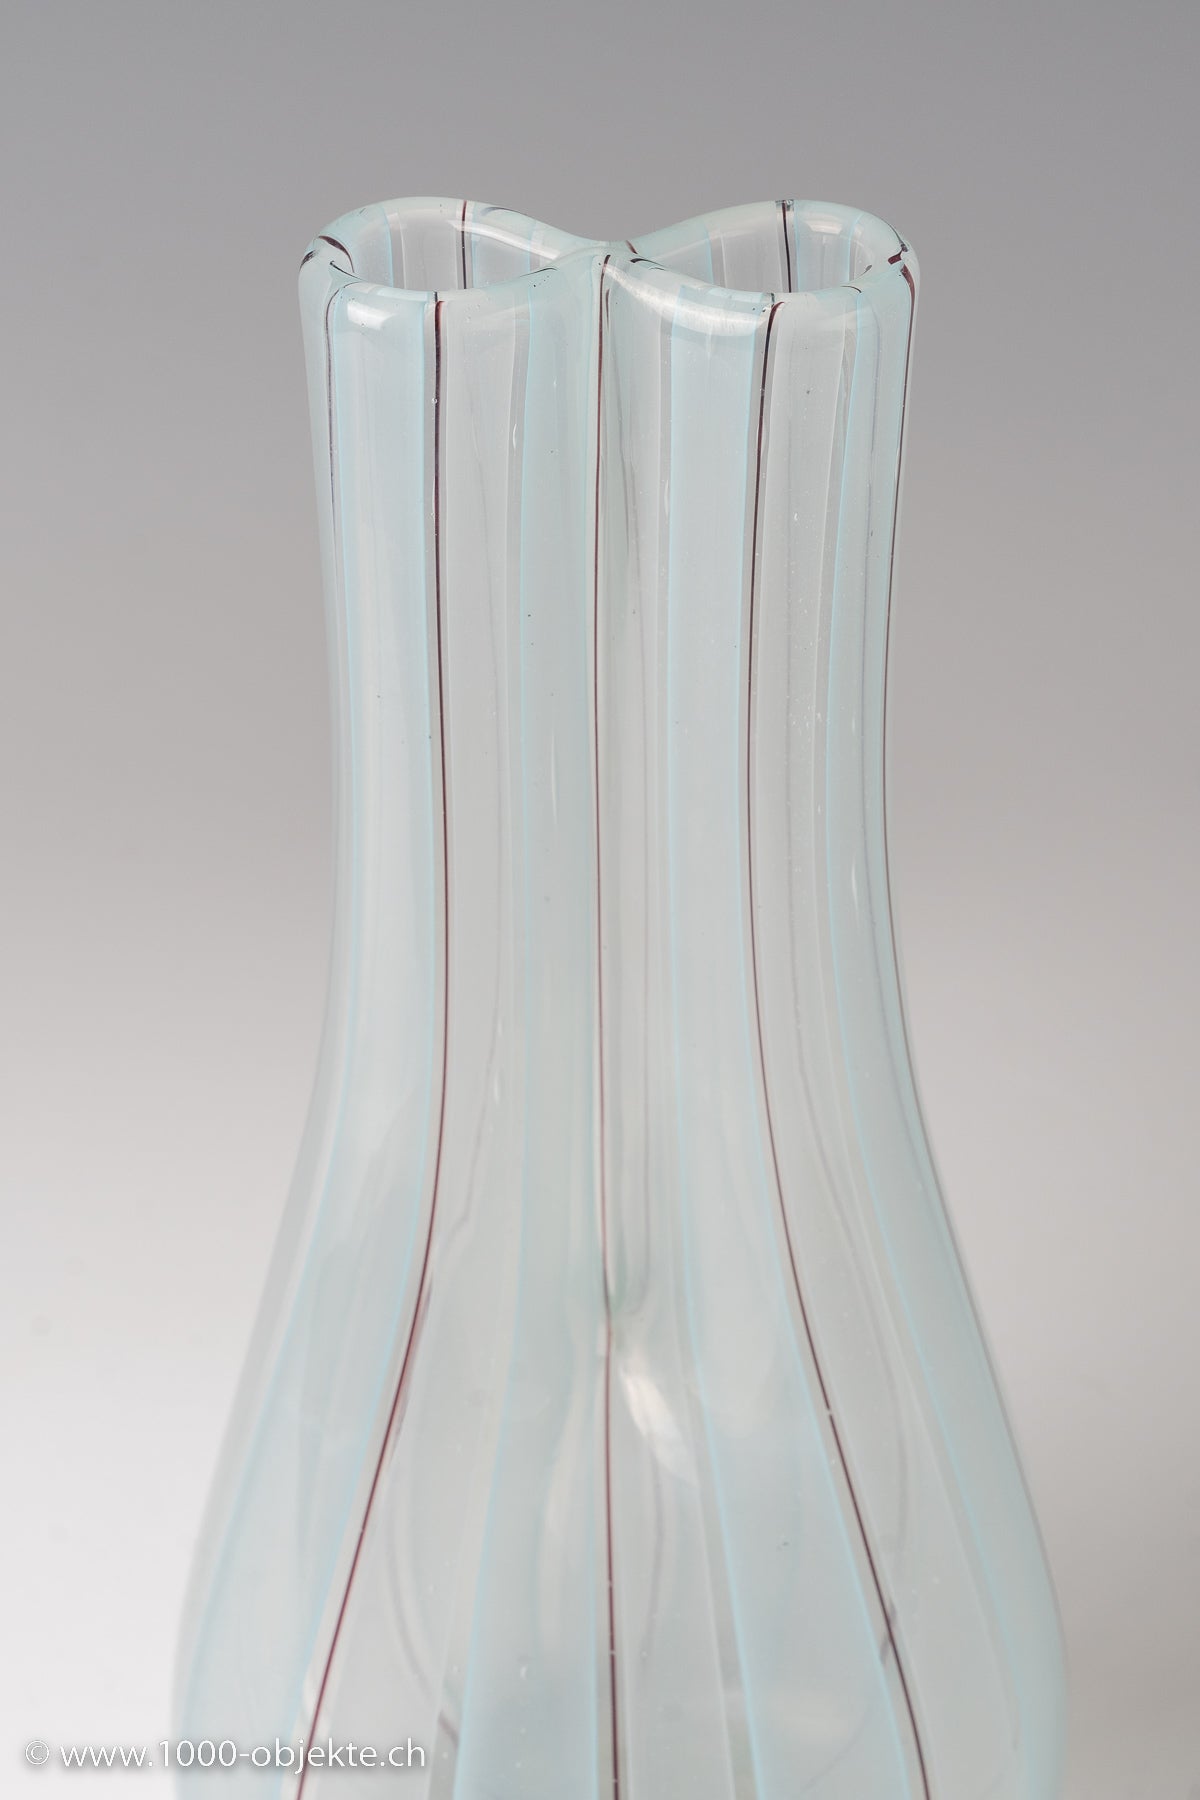 Barovier & Toso, rare double neck vase